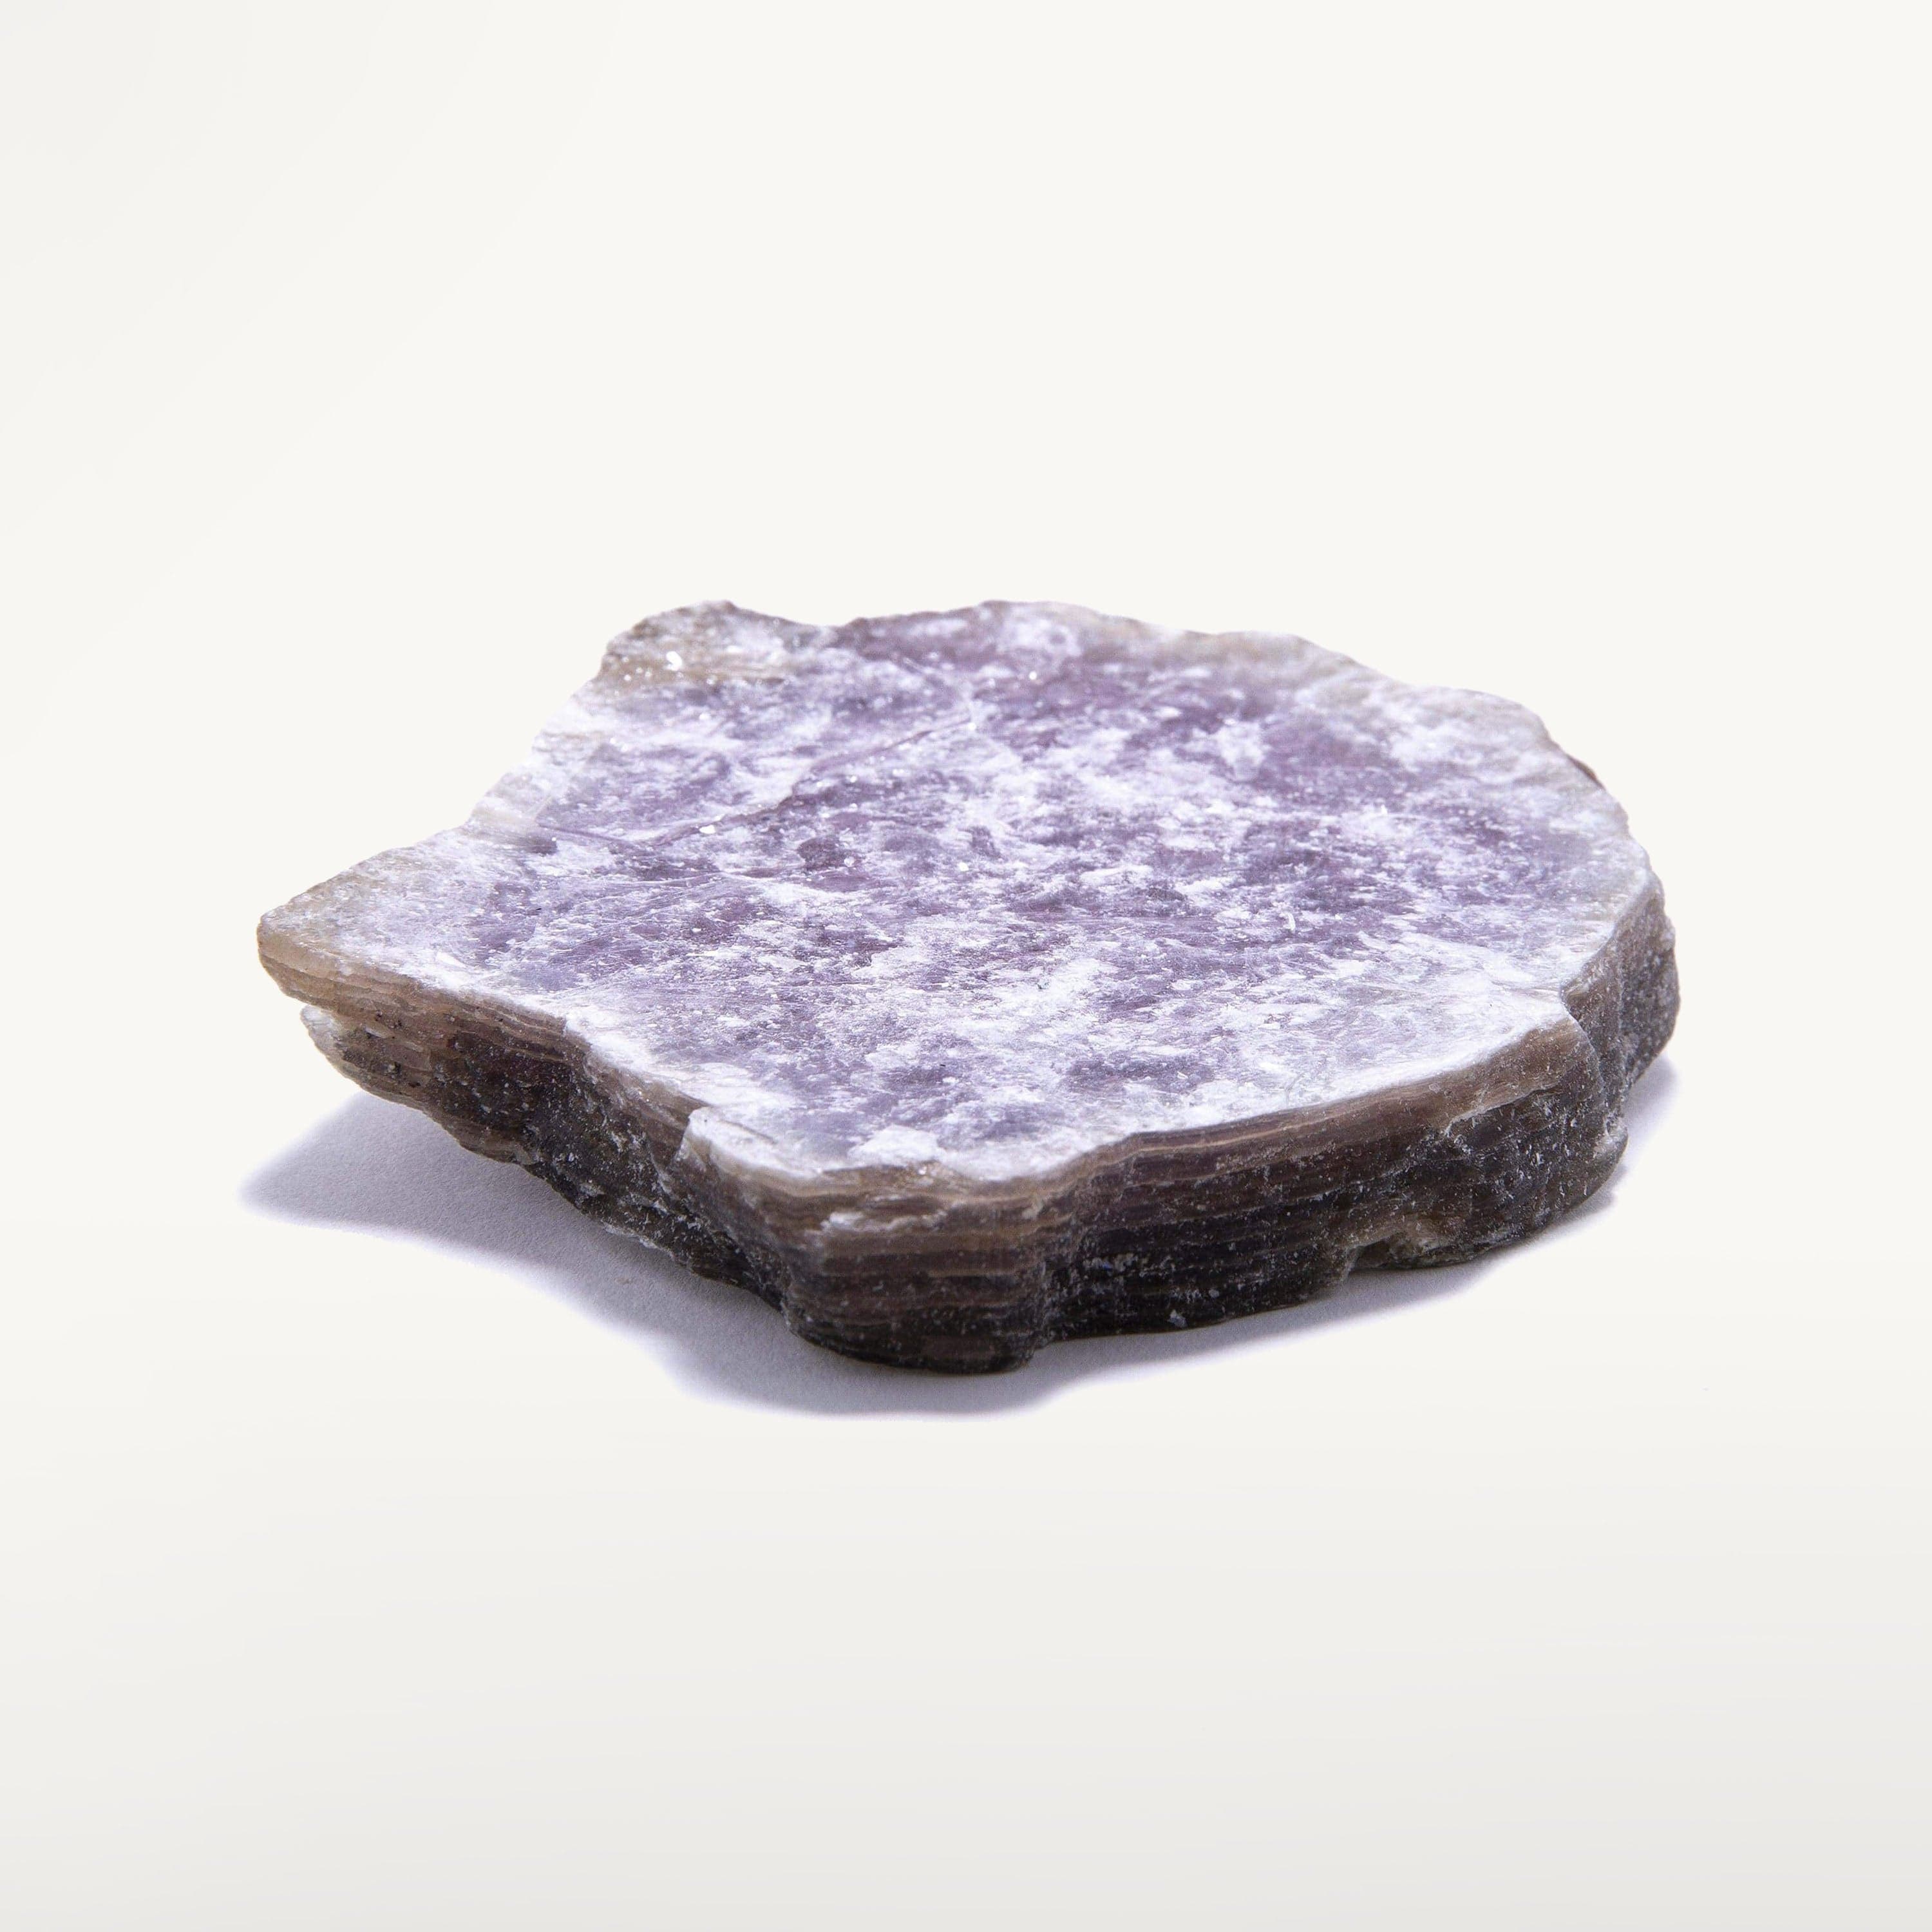 KALIFANO Natural Lepidolite 2 Pack Healing Stone from Brazil LEPIDOLITE20-X2